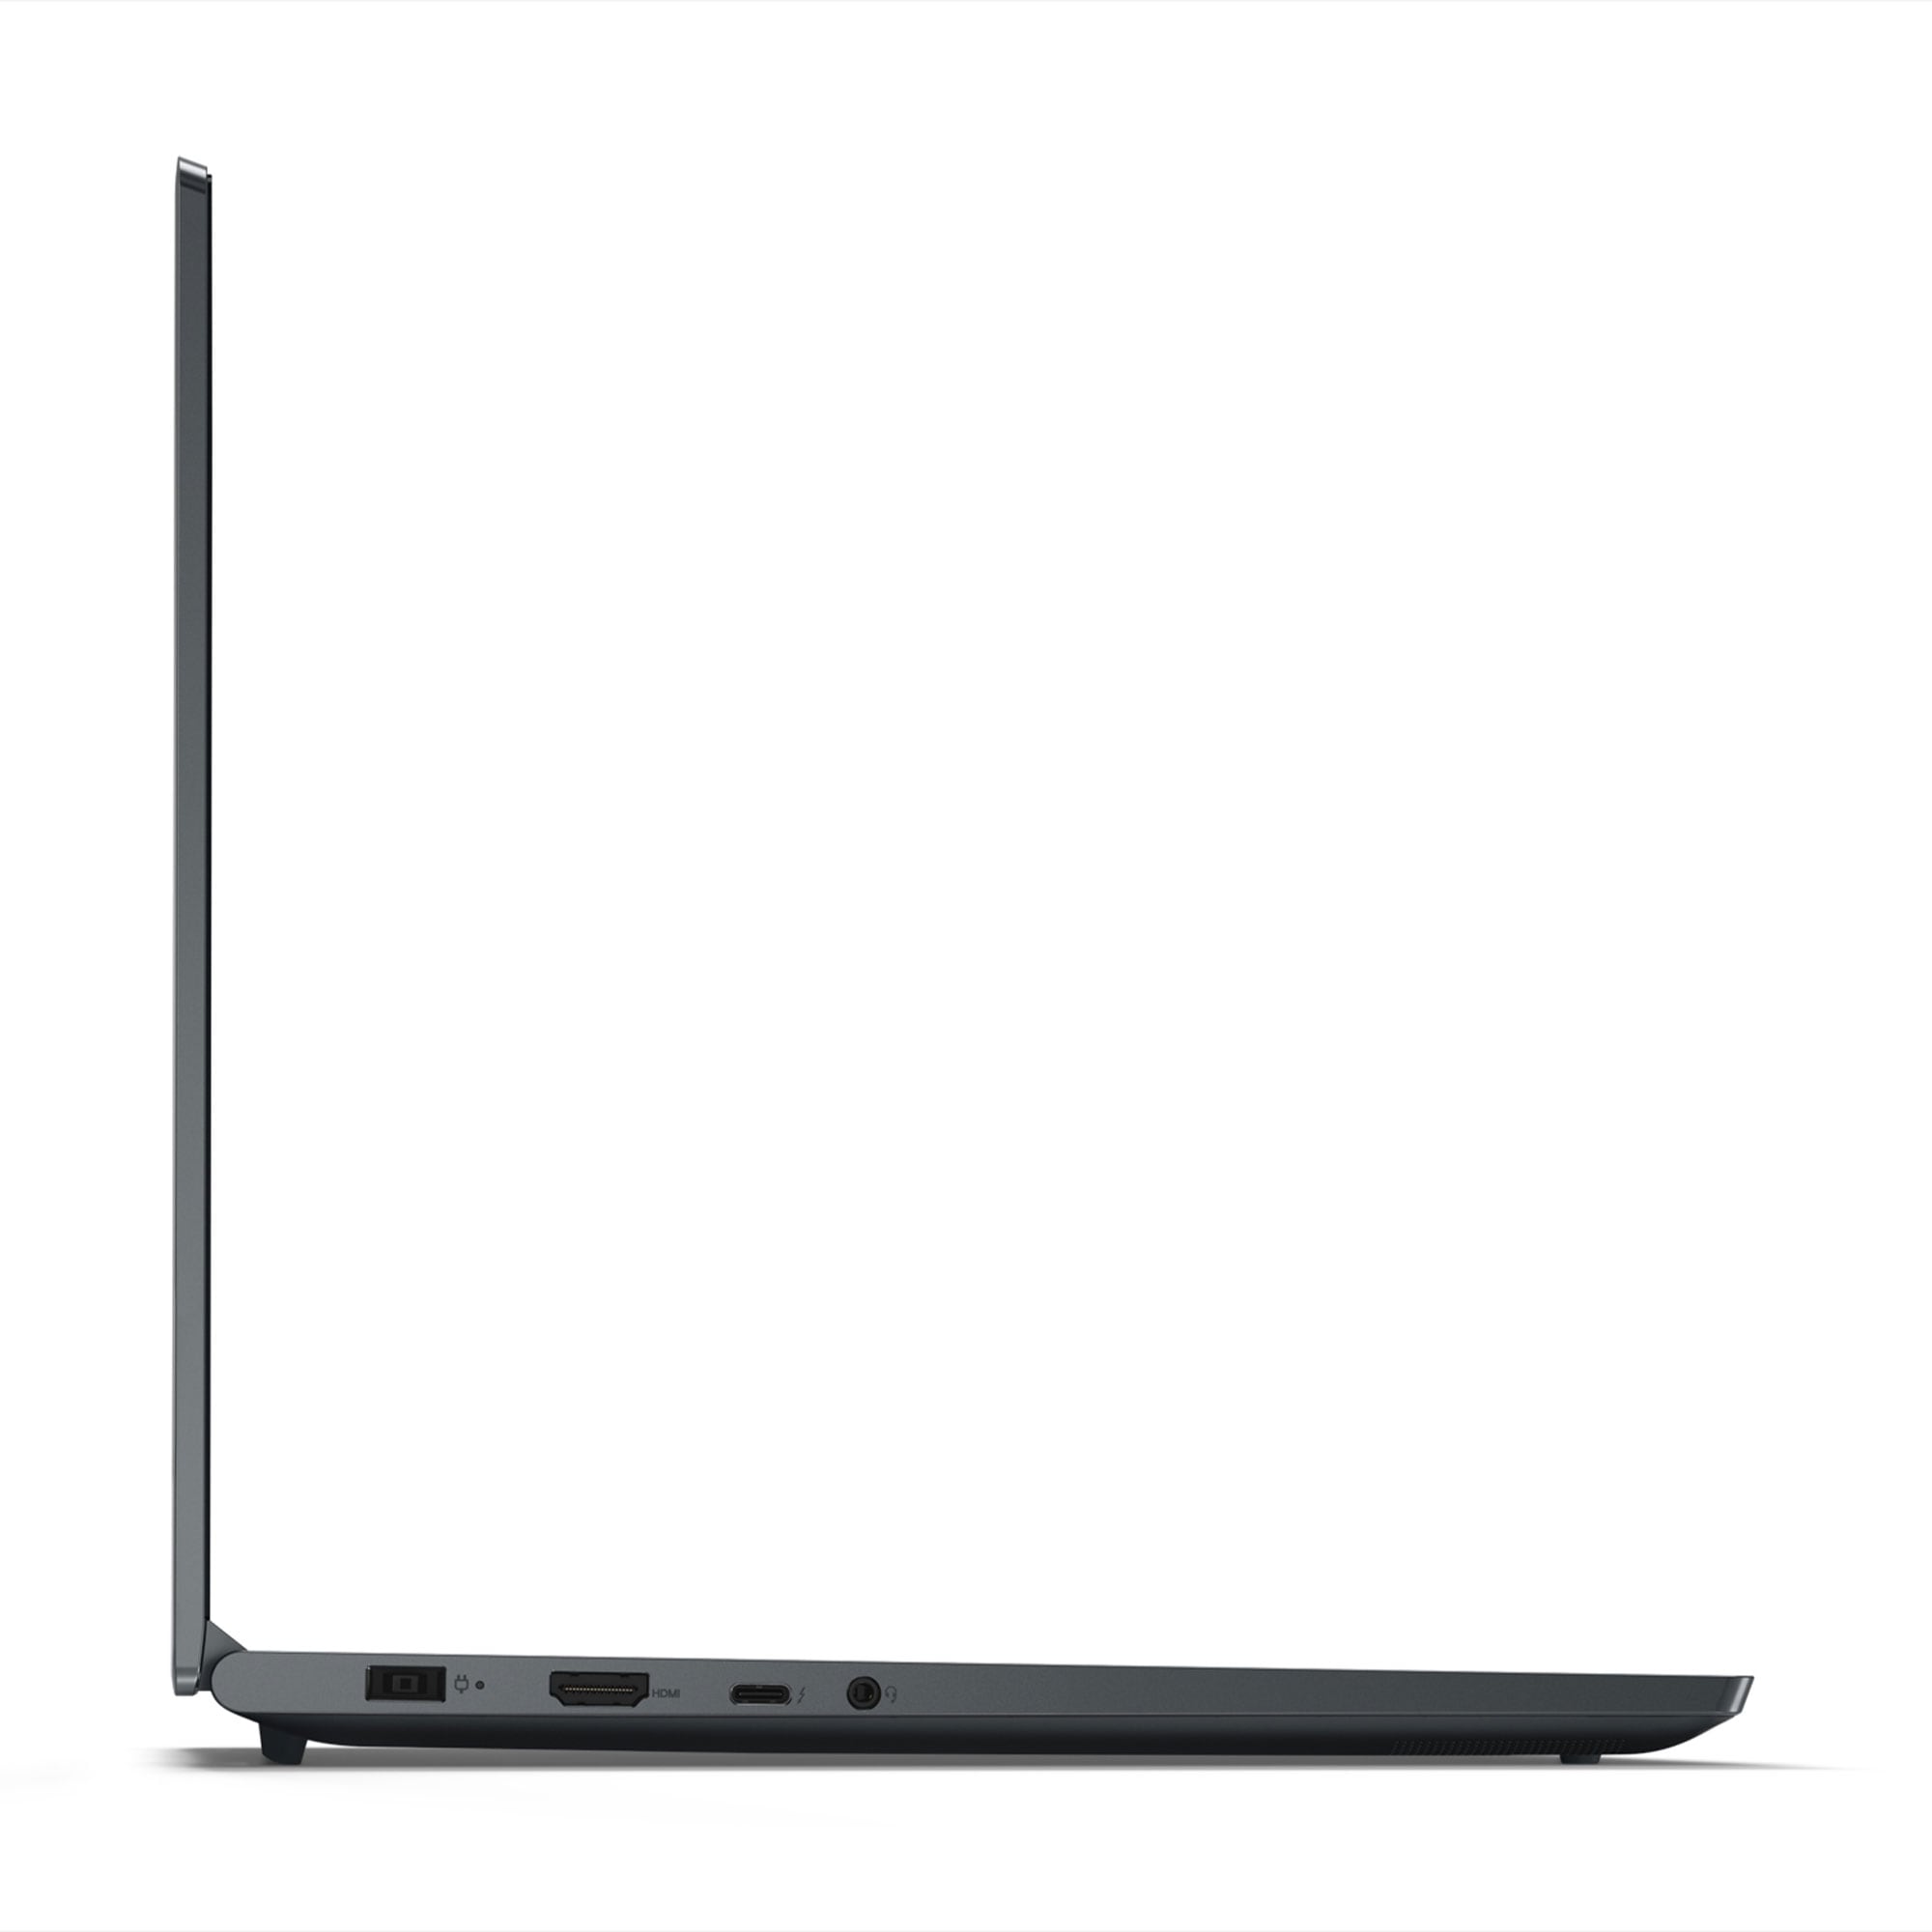 Lenovo IdeaPad Slim 7 GTX Laptop, 15.6" FHD IPS  300 nits, i5-10300H,  GeForce GTX 1650 4GB, 16GB, 1TB SSD, Win 10 Home - image 3 of 5